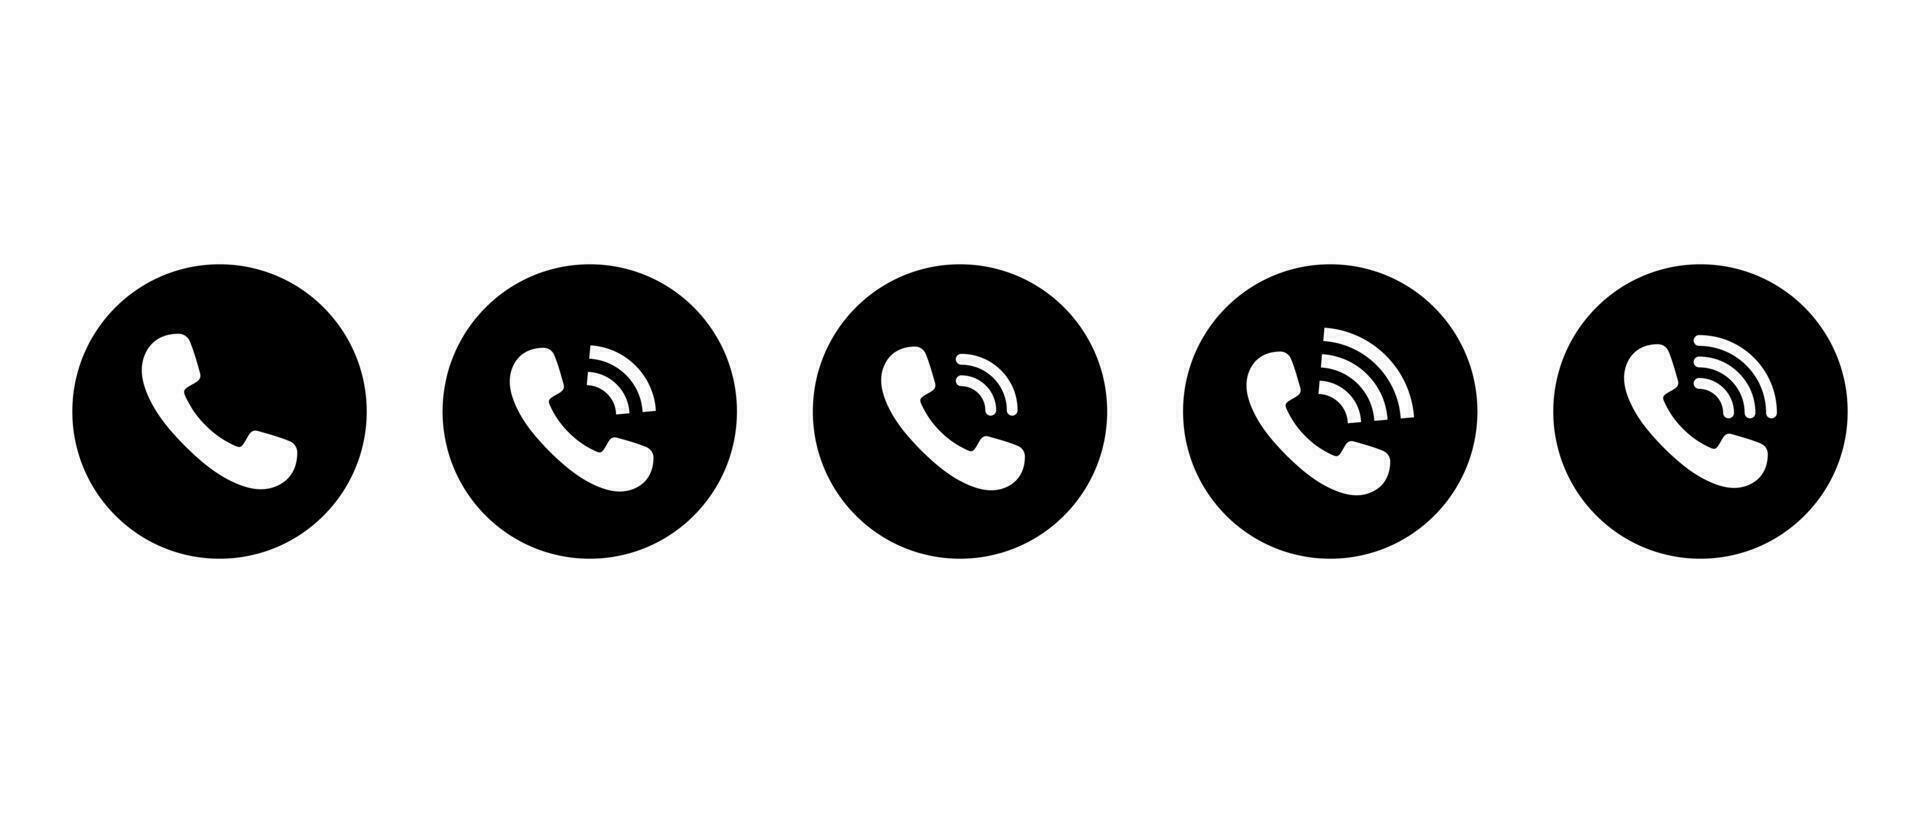 entrante llamada botón icono vector en negro círculo. teléfono receptor, teléfono firmar símbolo